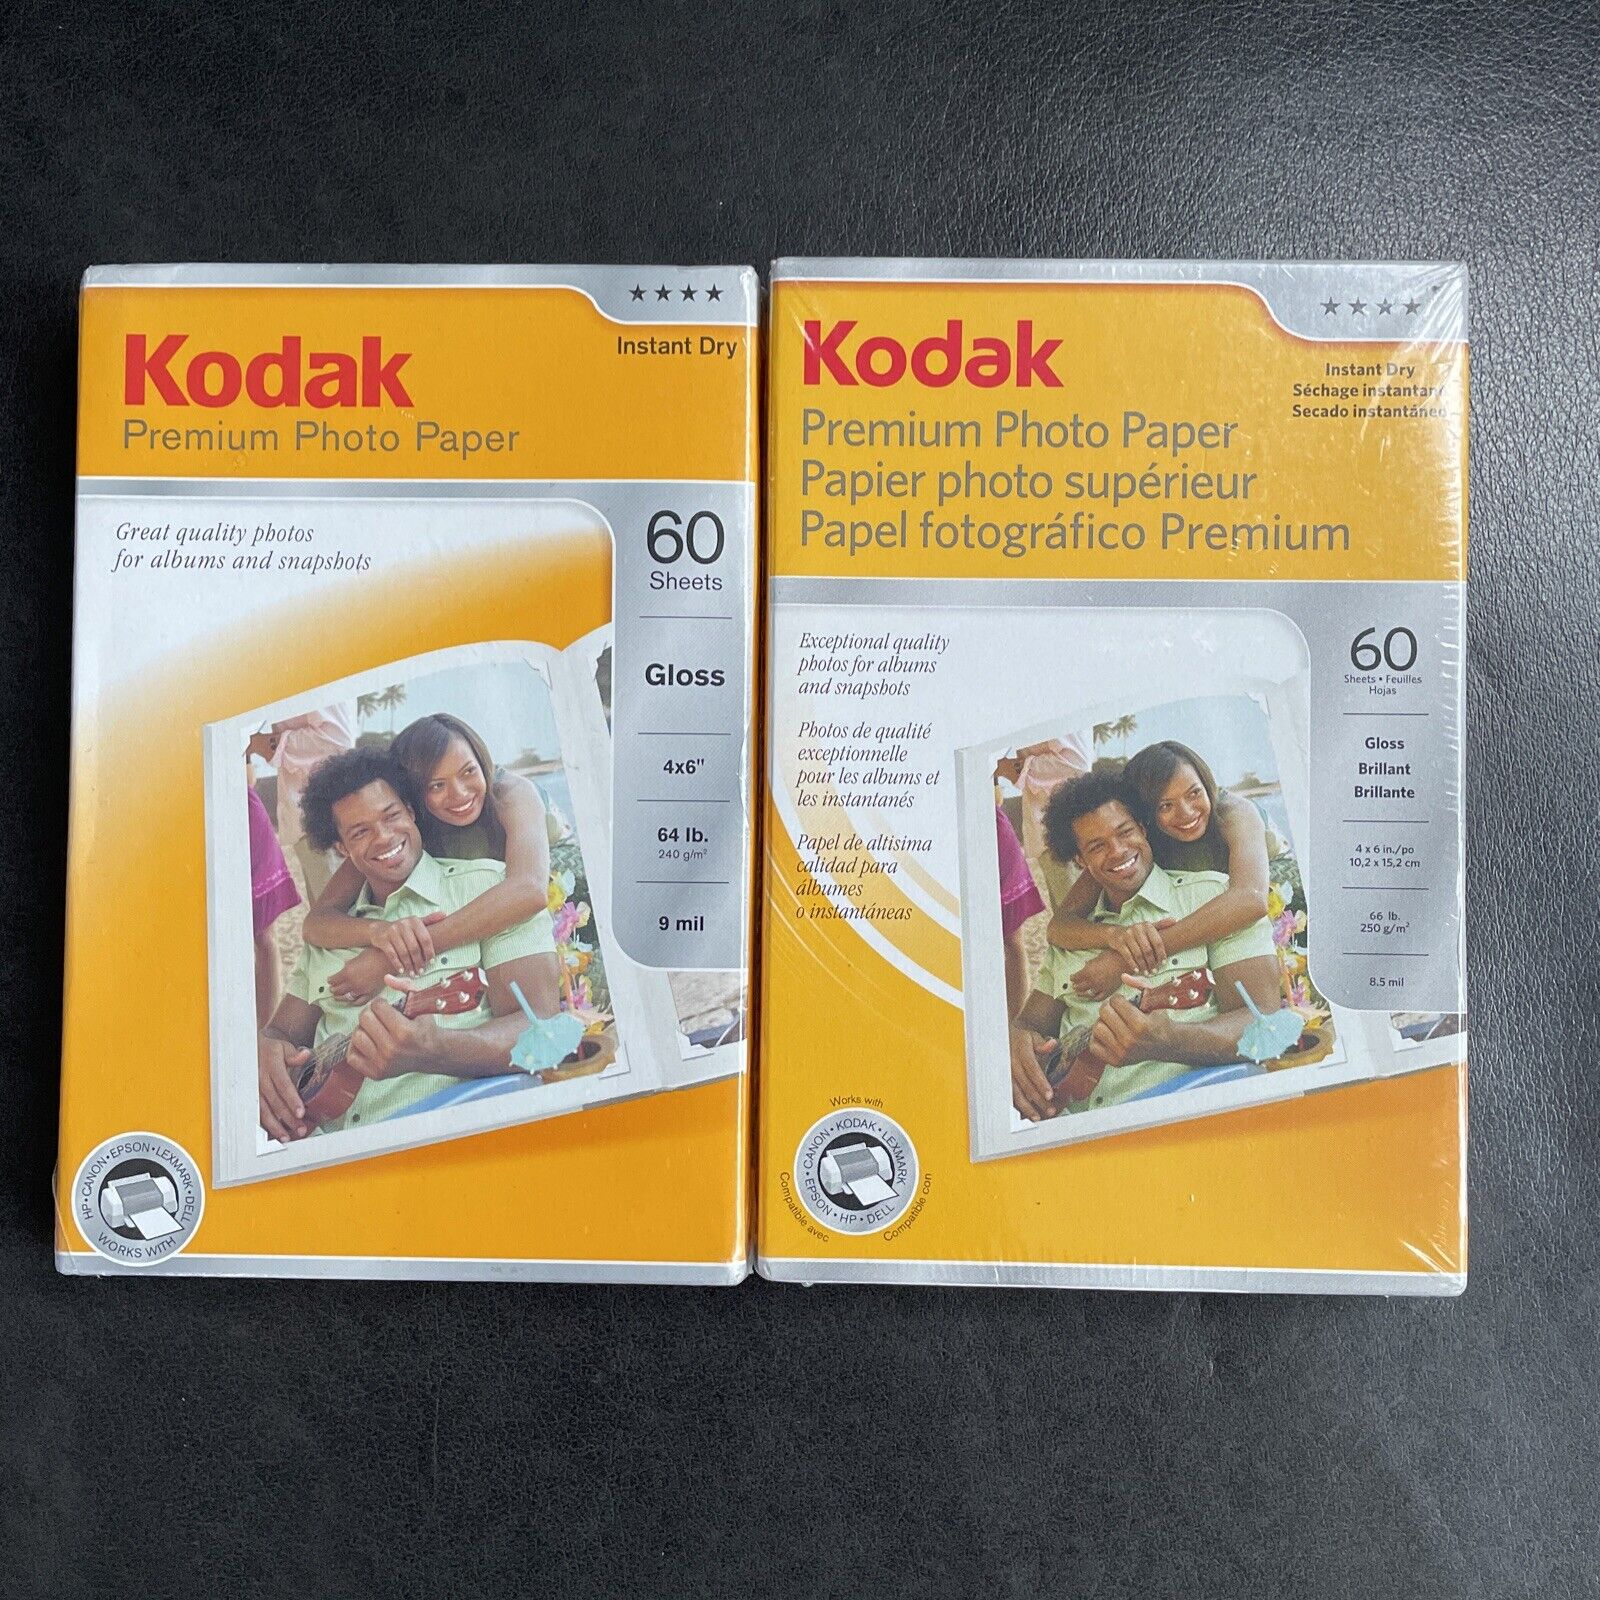 Kodak Premium Photo Paper 60 Sheets 4x6 Gloss Brand Instant Dry New/Sealed